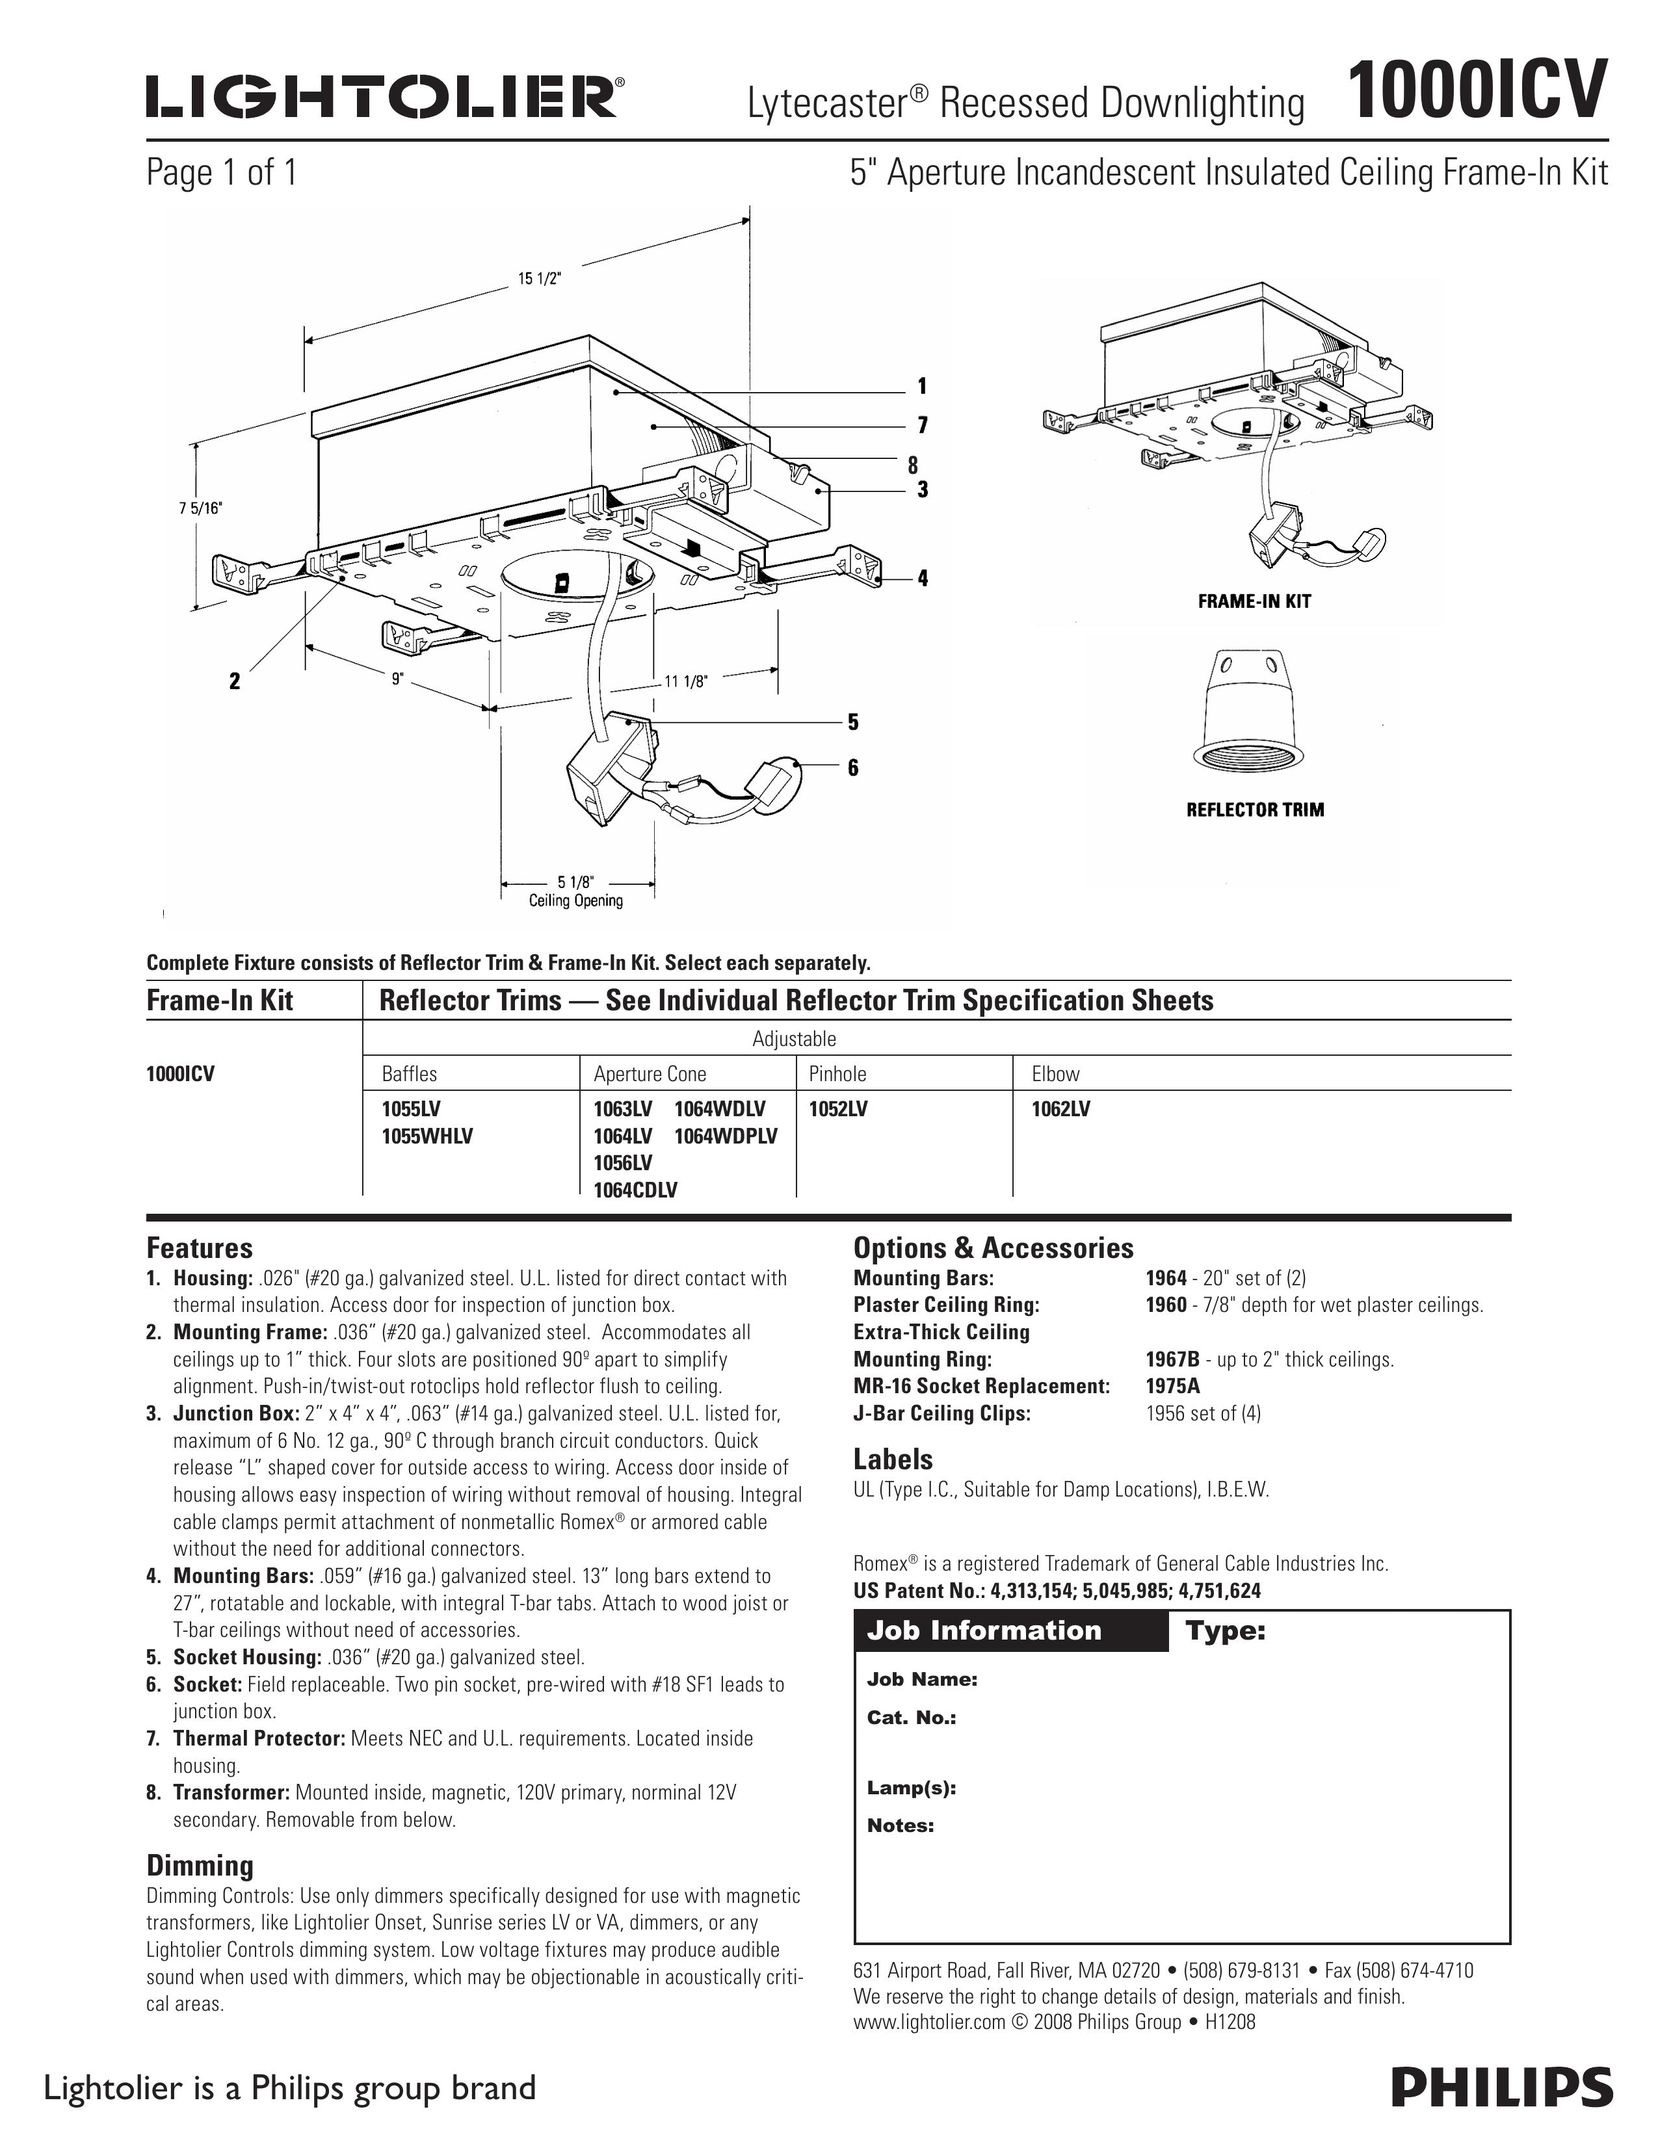 Lightolier 1000ICV Indoor Furnishings User Manual